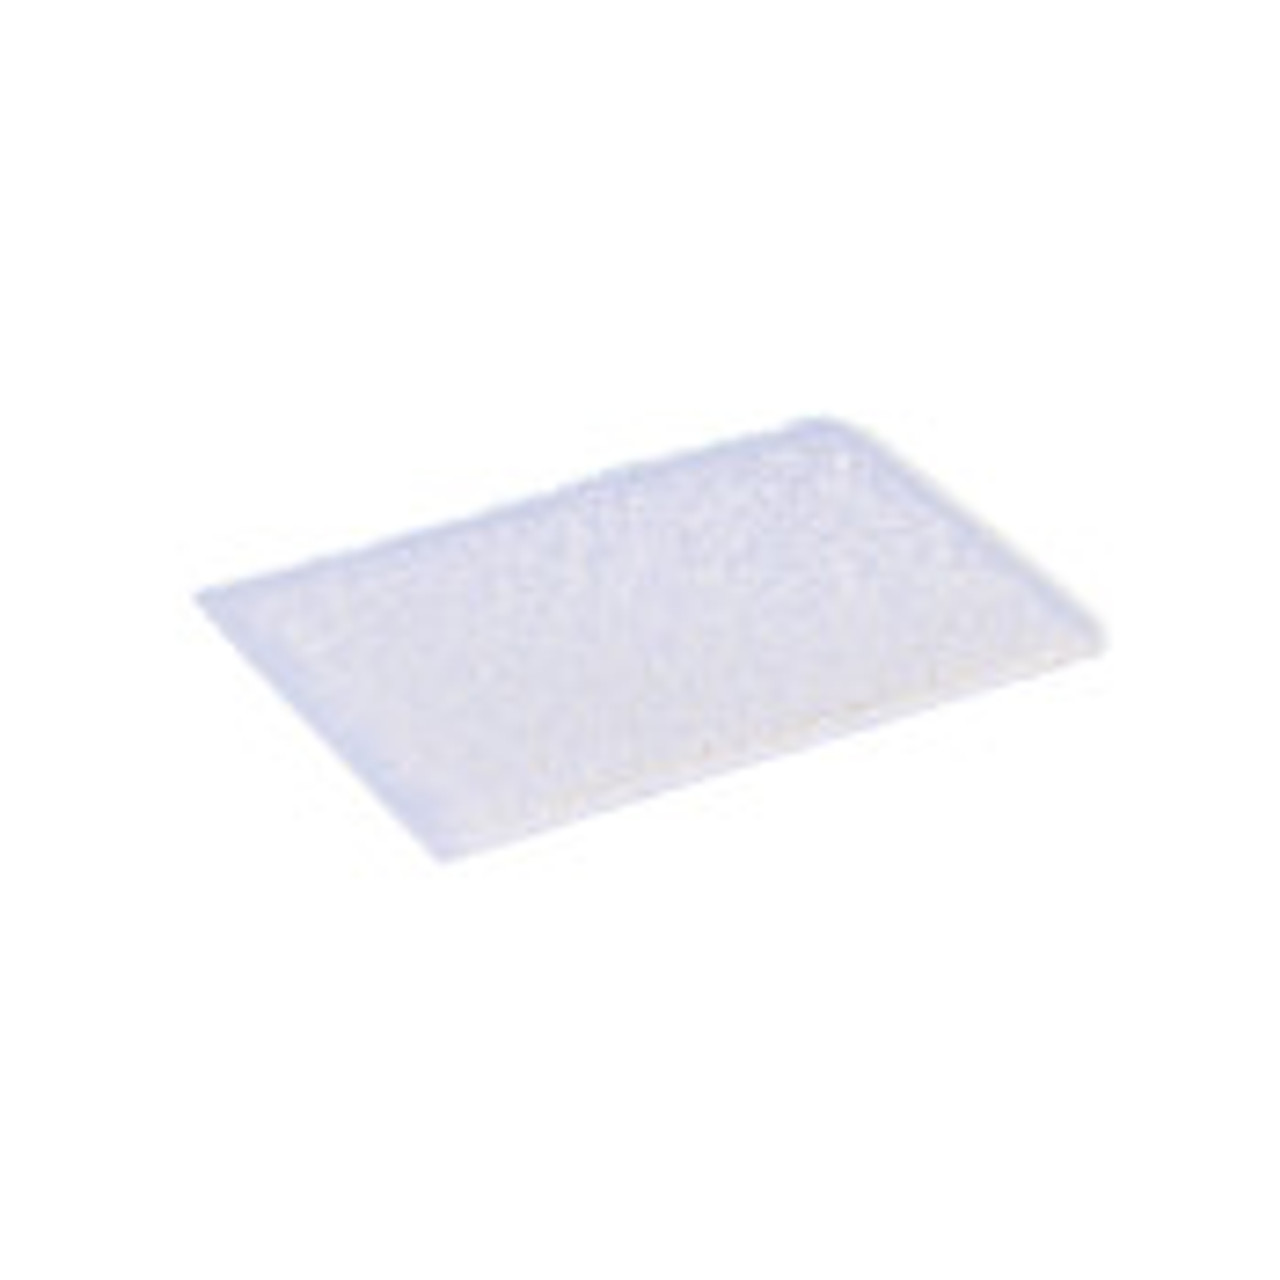 VELCRO® Acrylic Adhesive Backed Tape - FeinerSupply